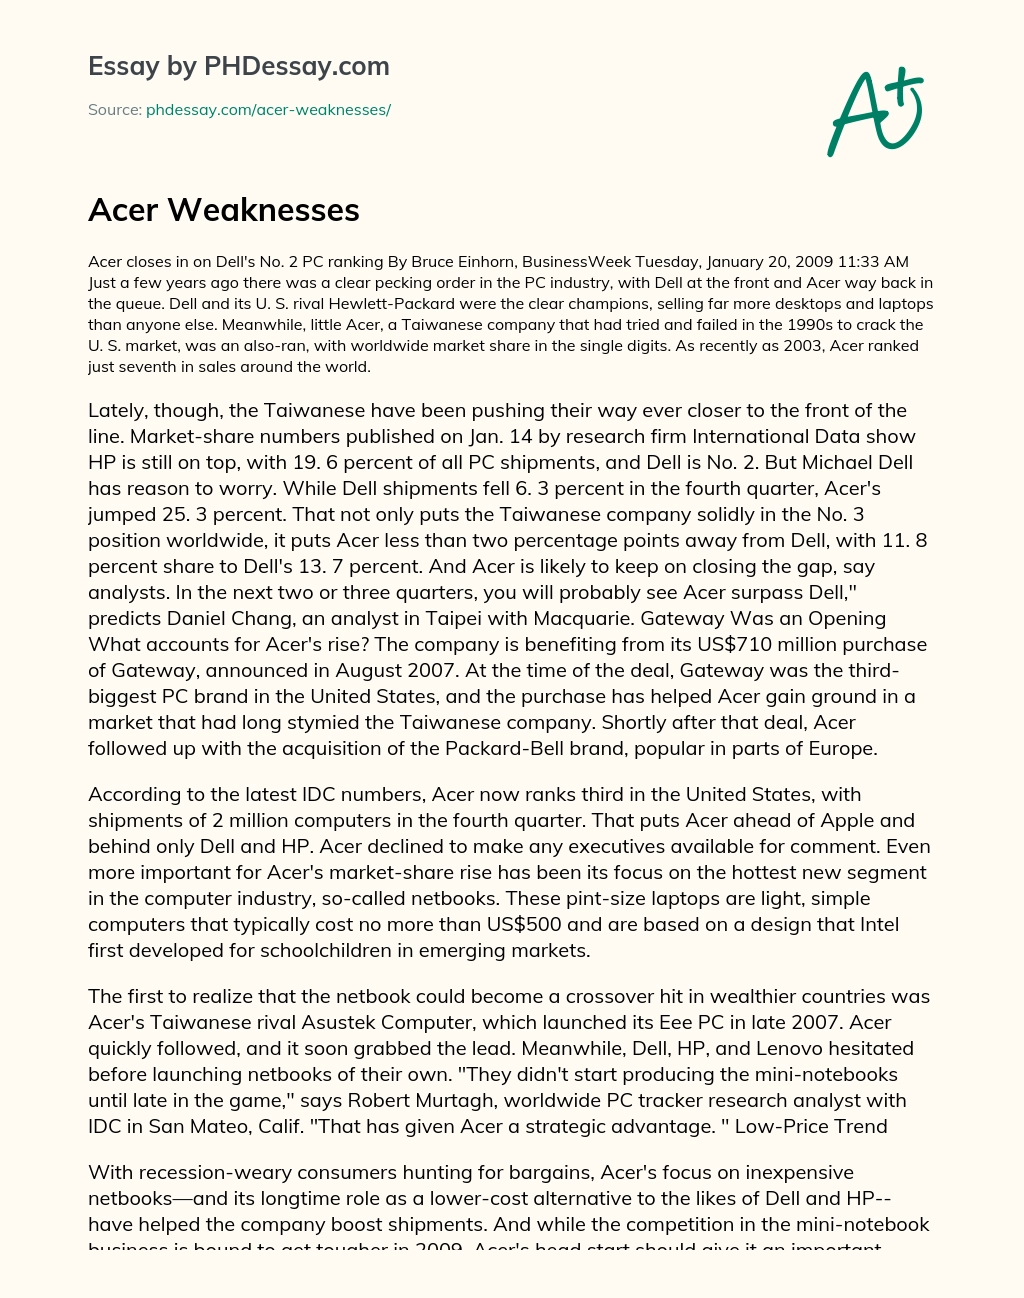 Acer Weaknesses essay